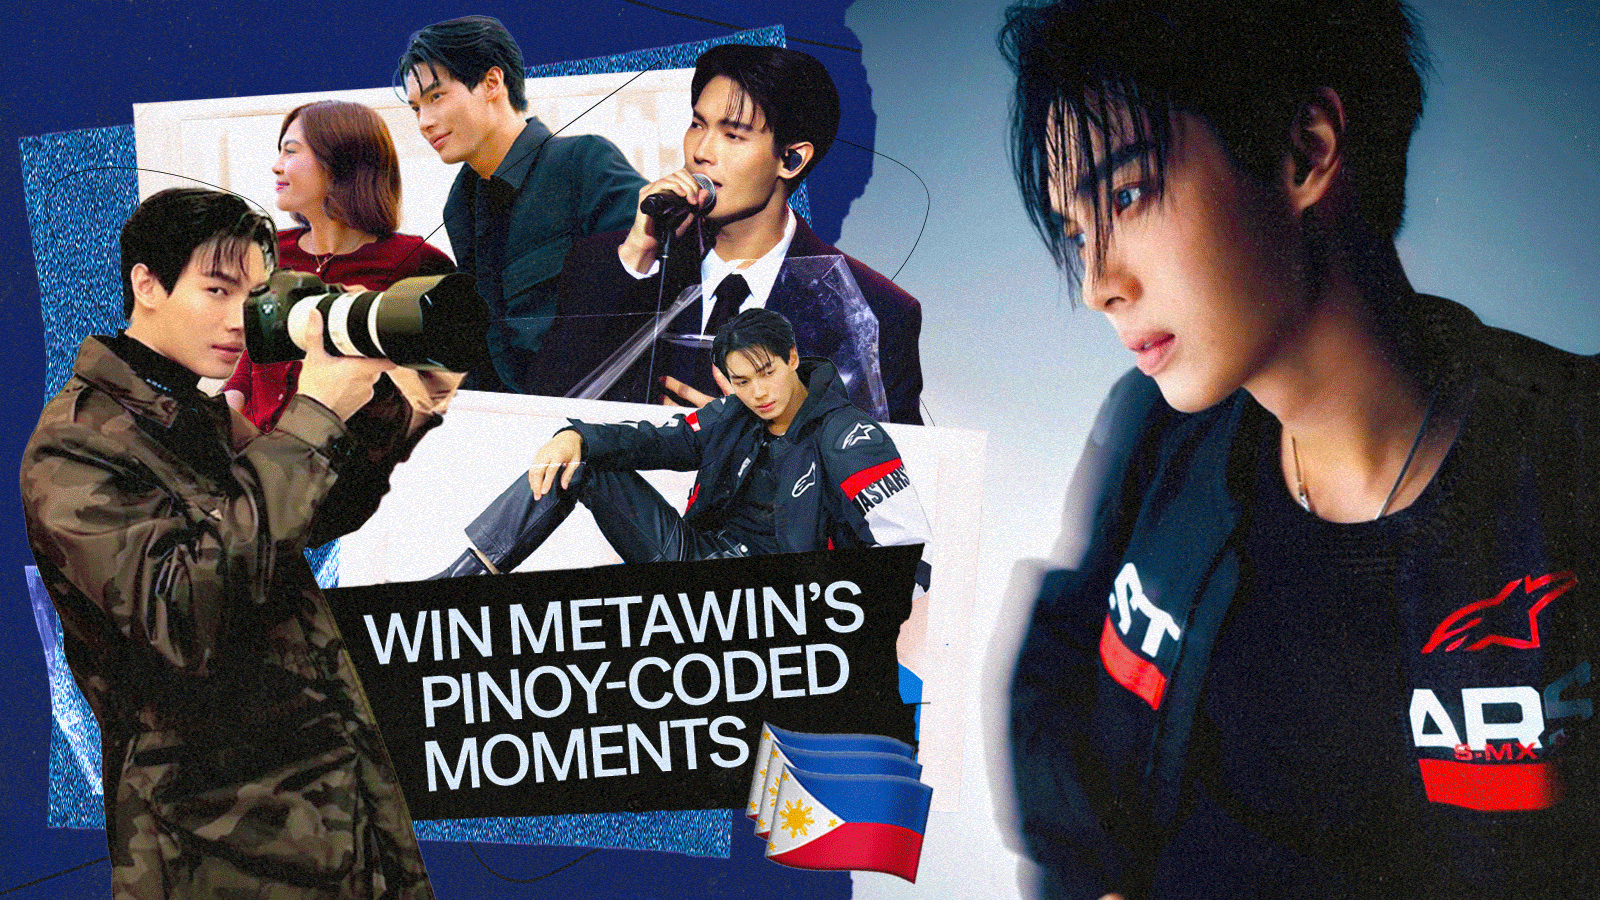 Filipino-Coded Moments of Win Metawin